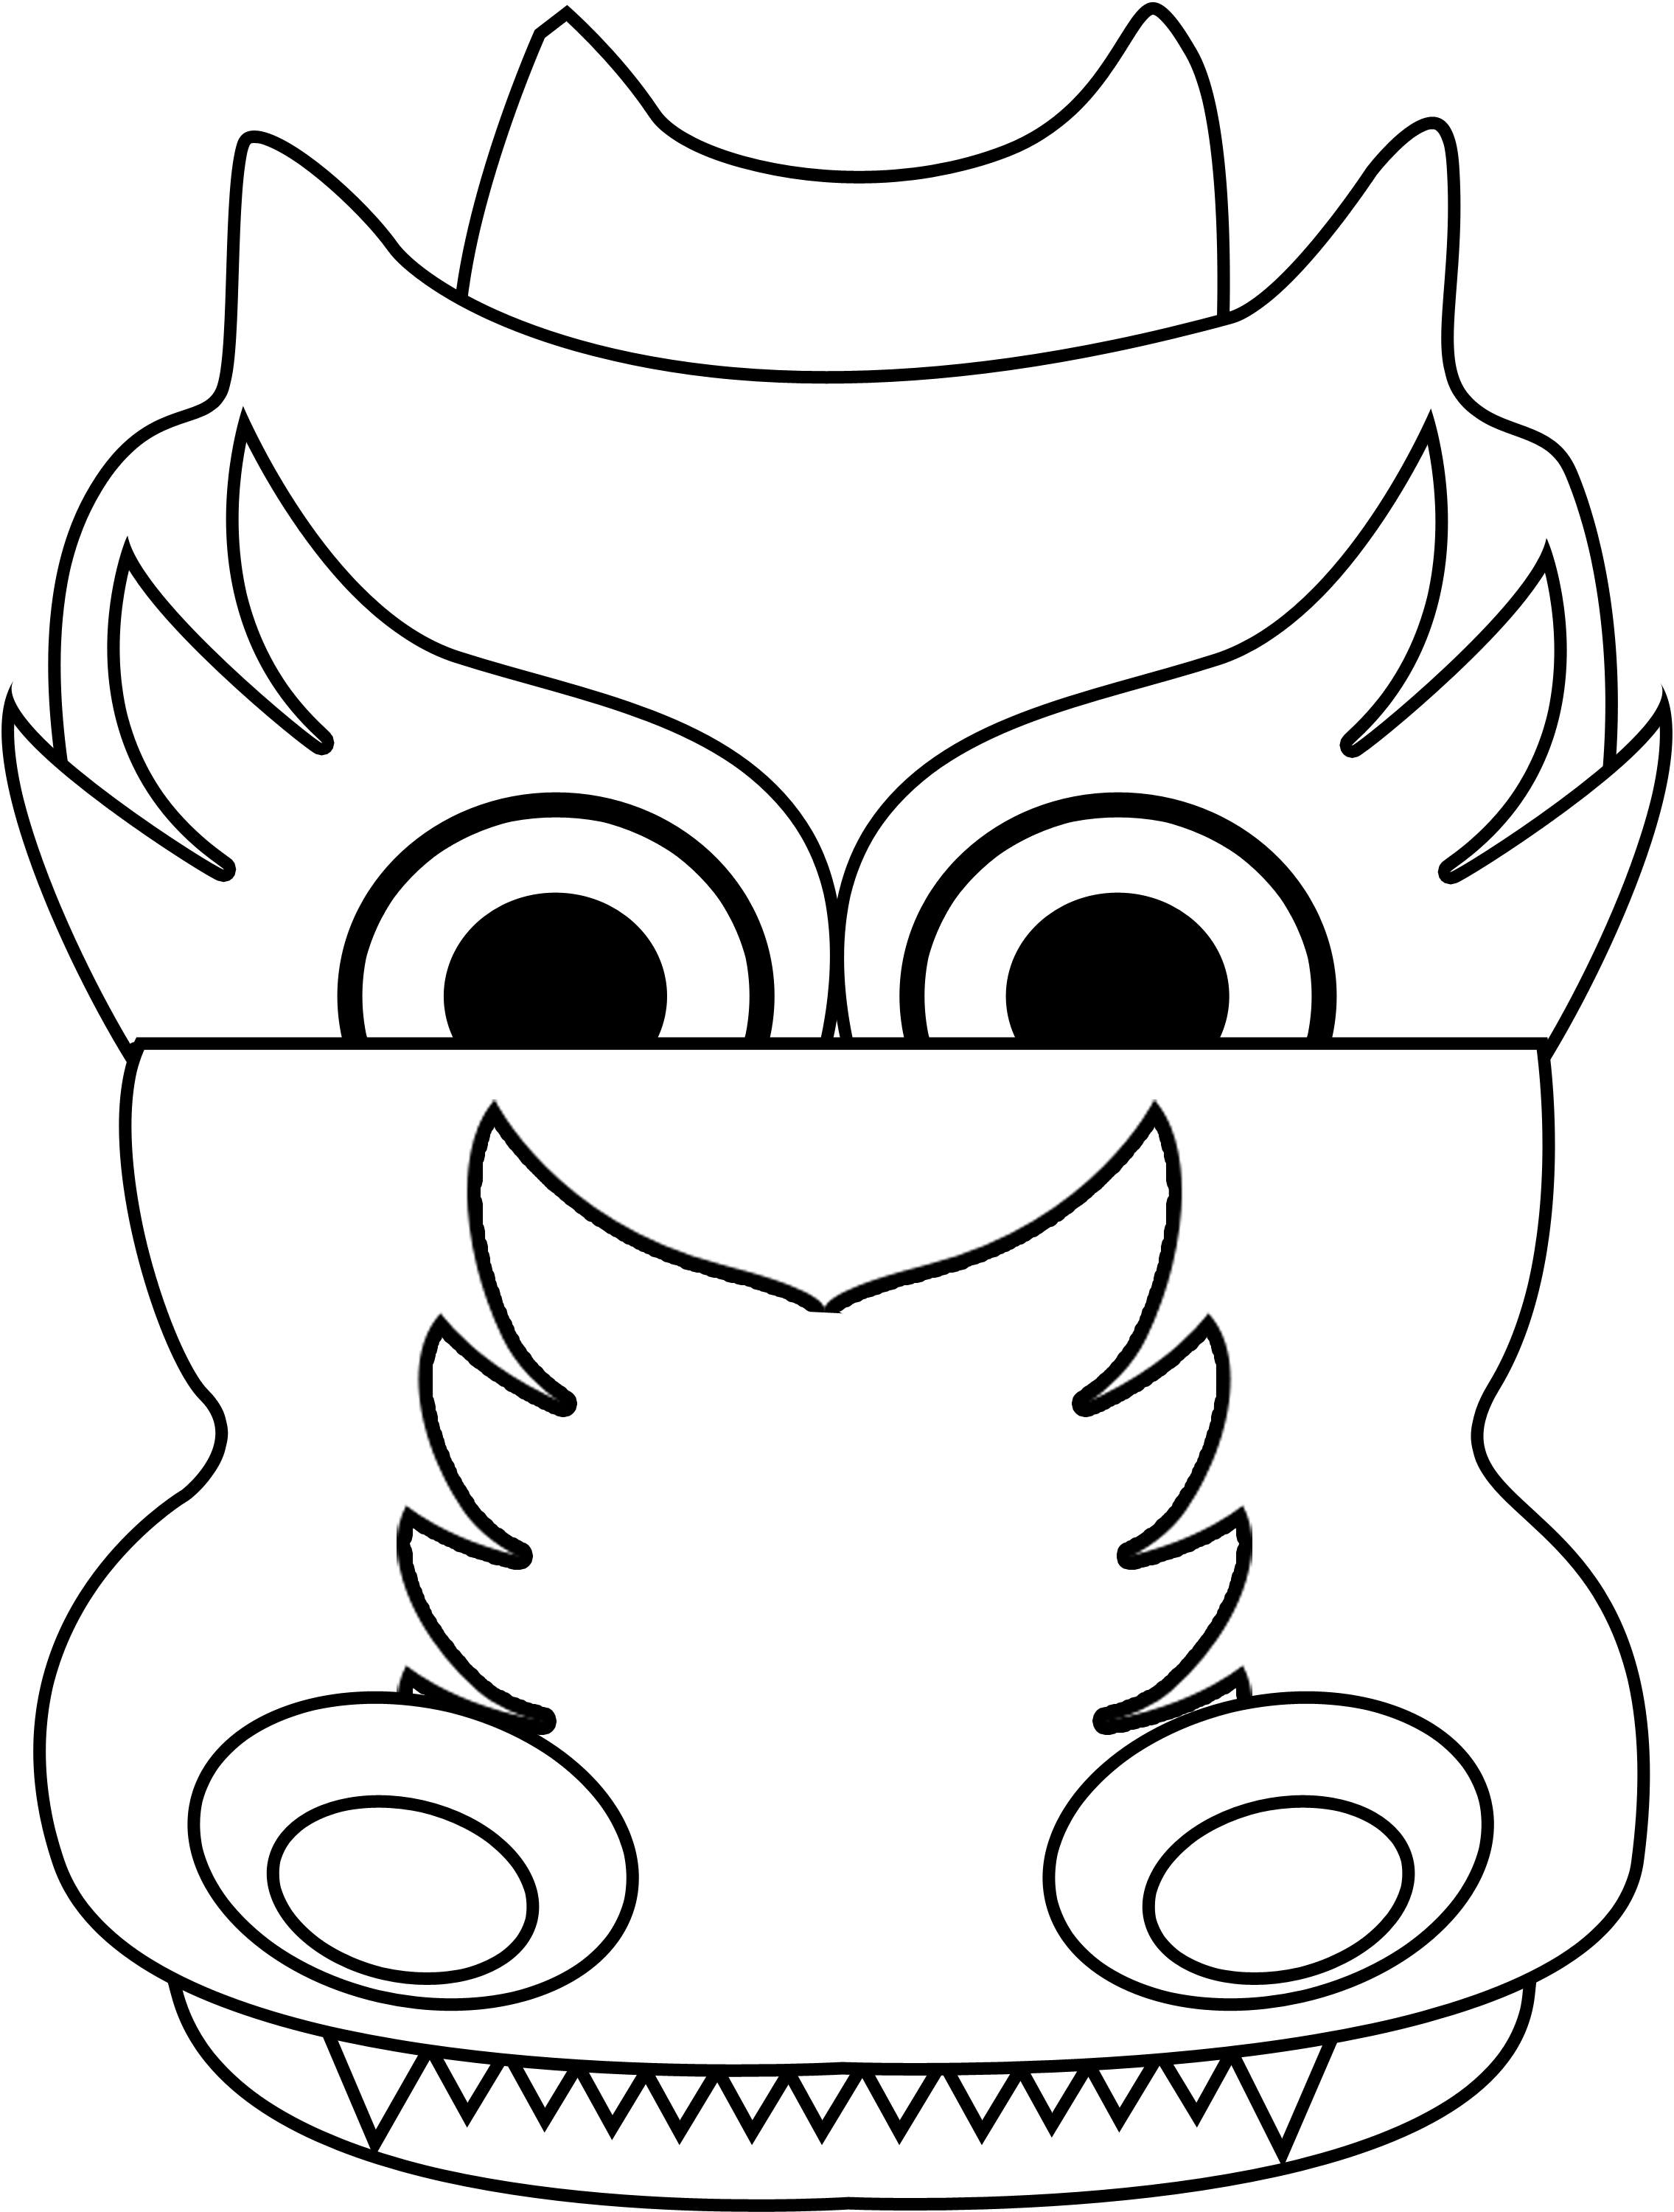 Dragon head template | Children-Education | Pinterest